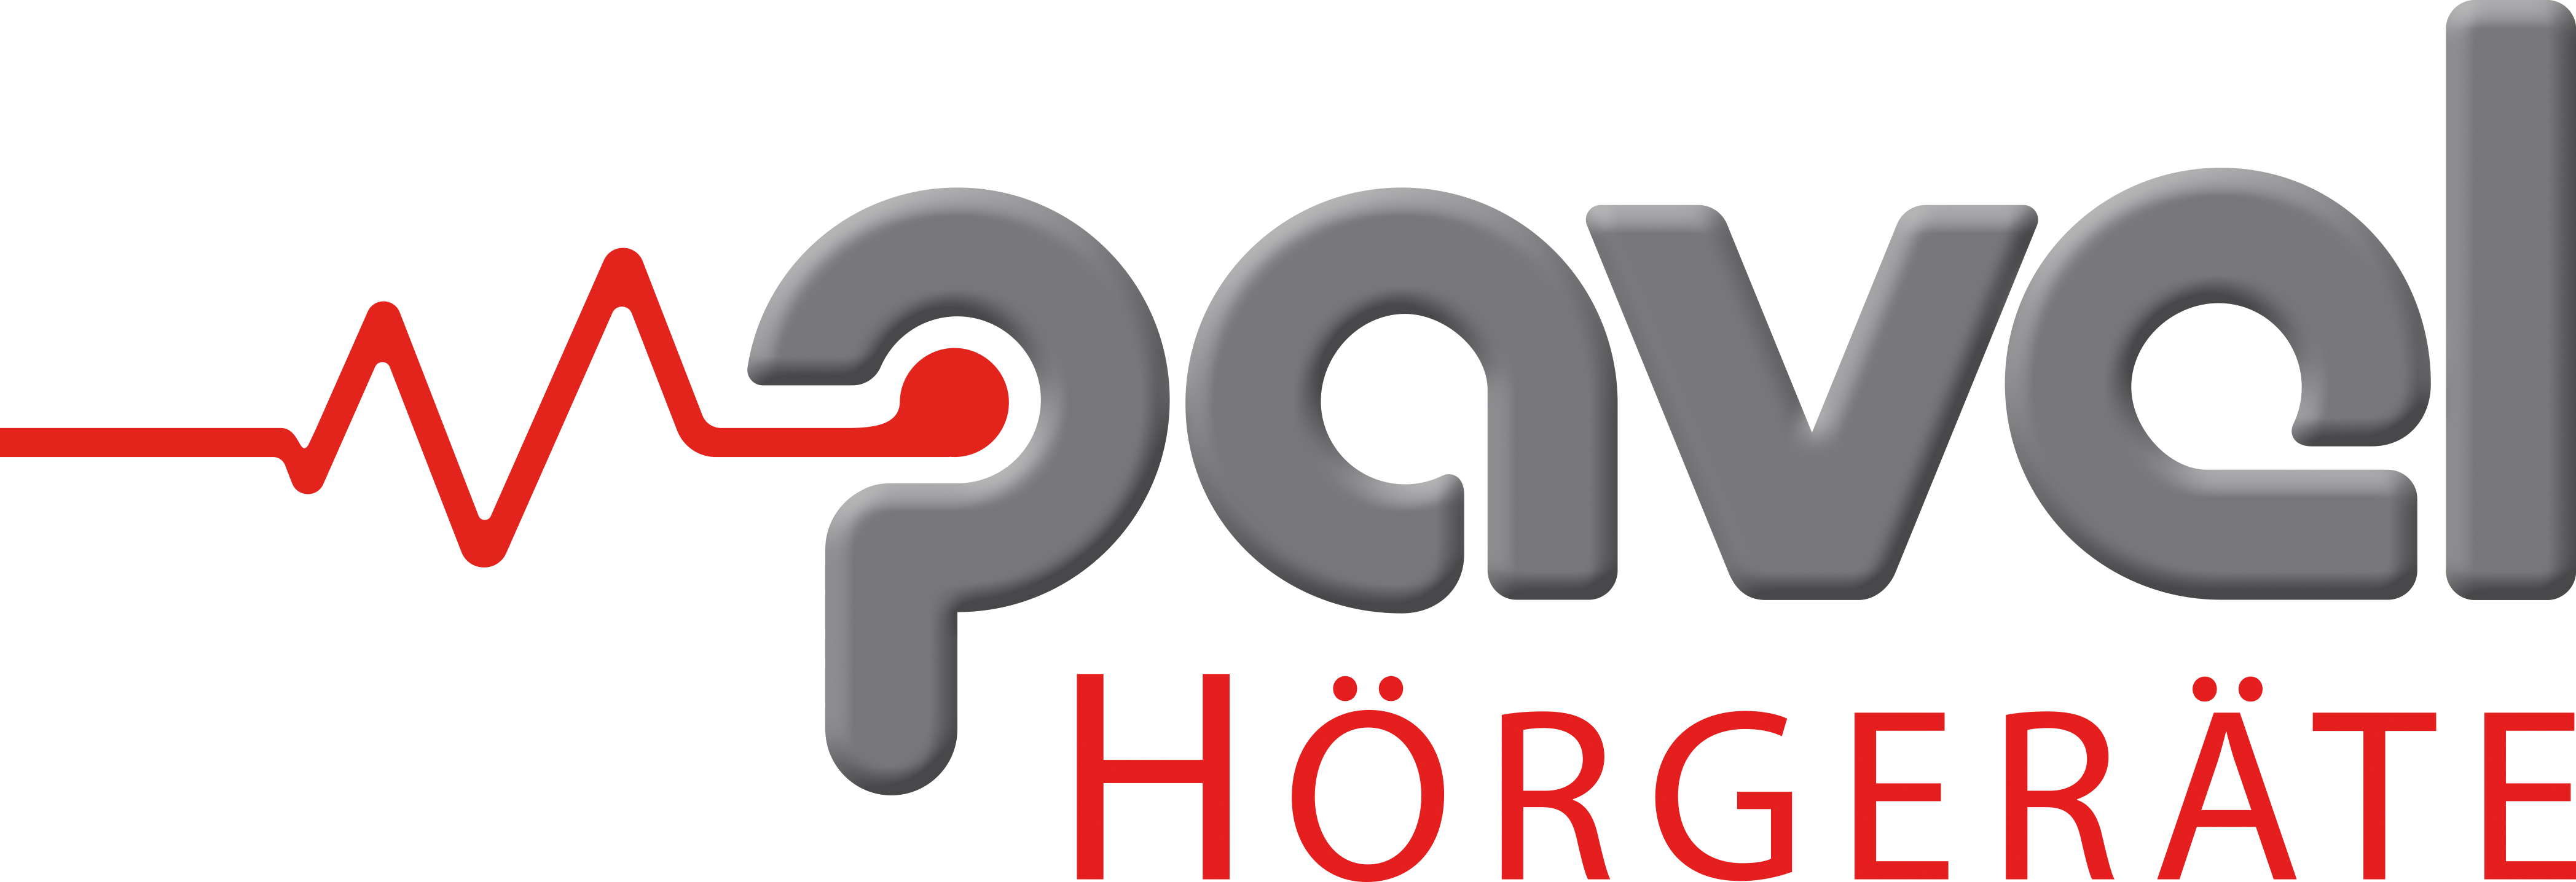 Pavel Hörgeräte - Logo